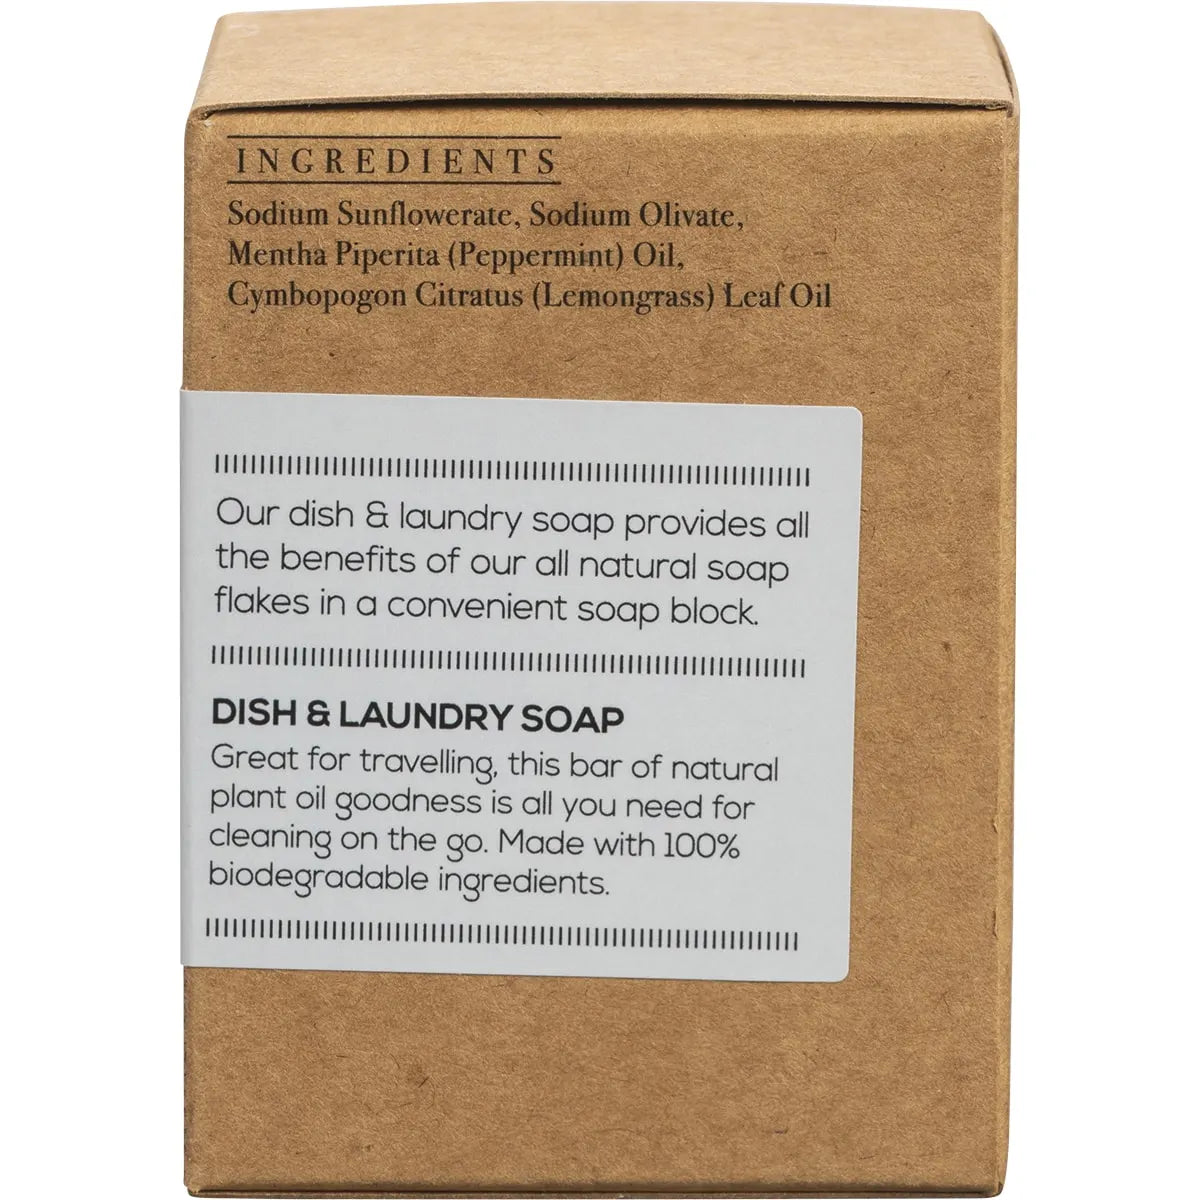 The Australian Natural Co Dish & Laundry Soap Bar 200g